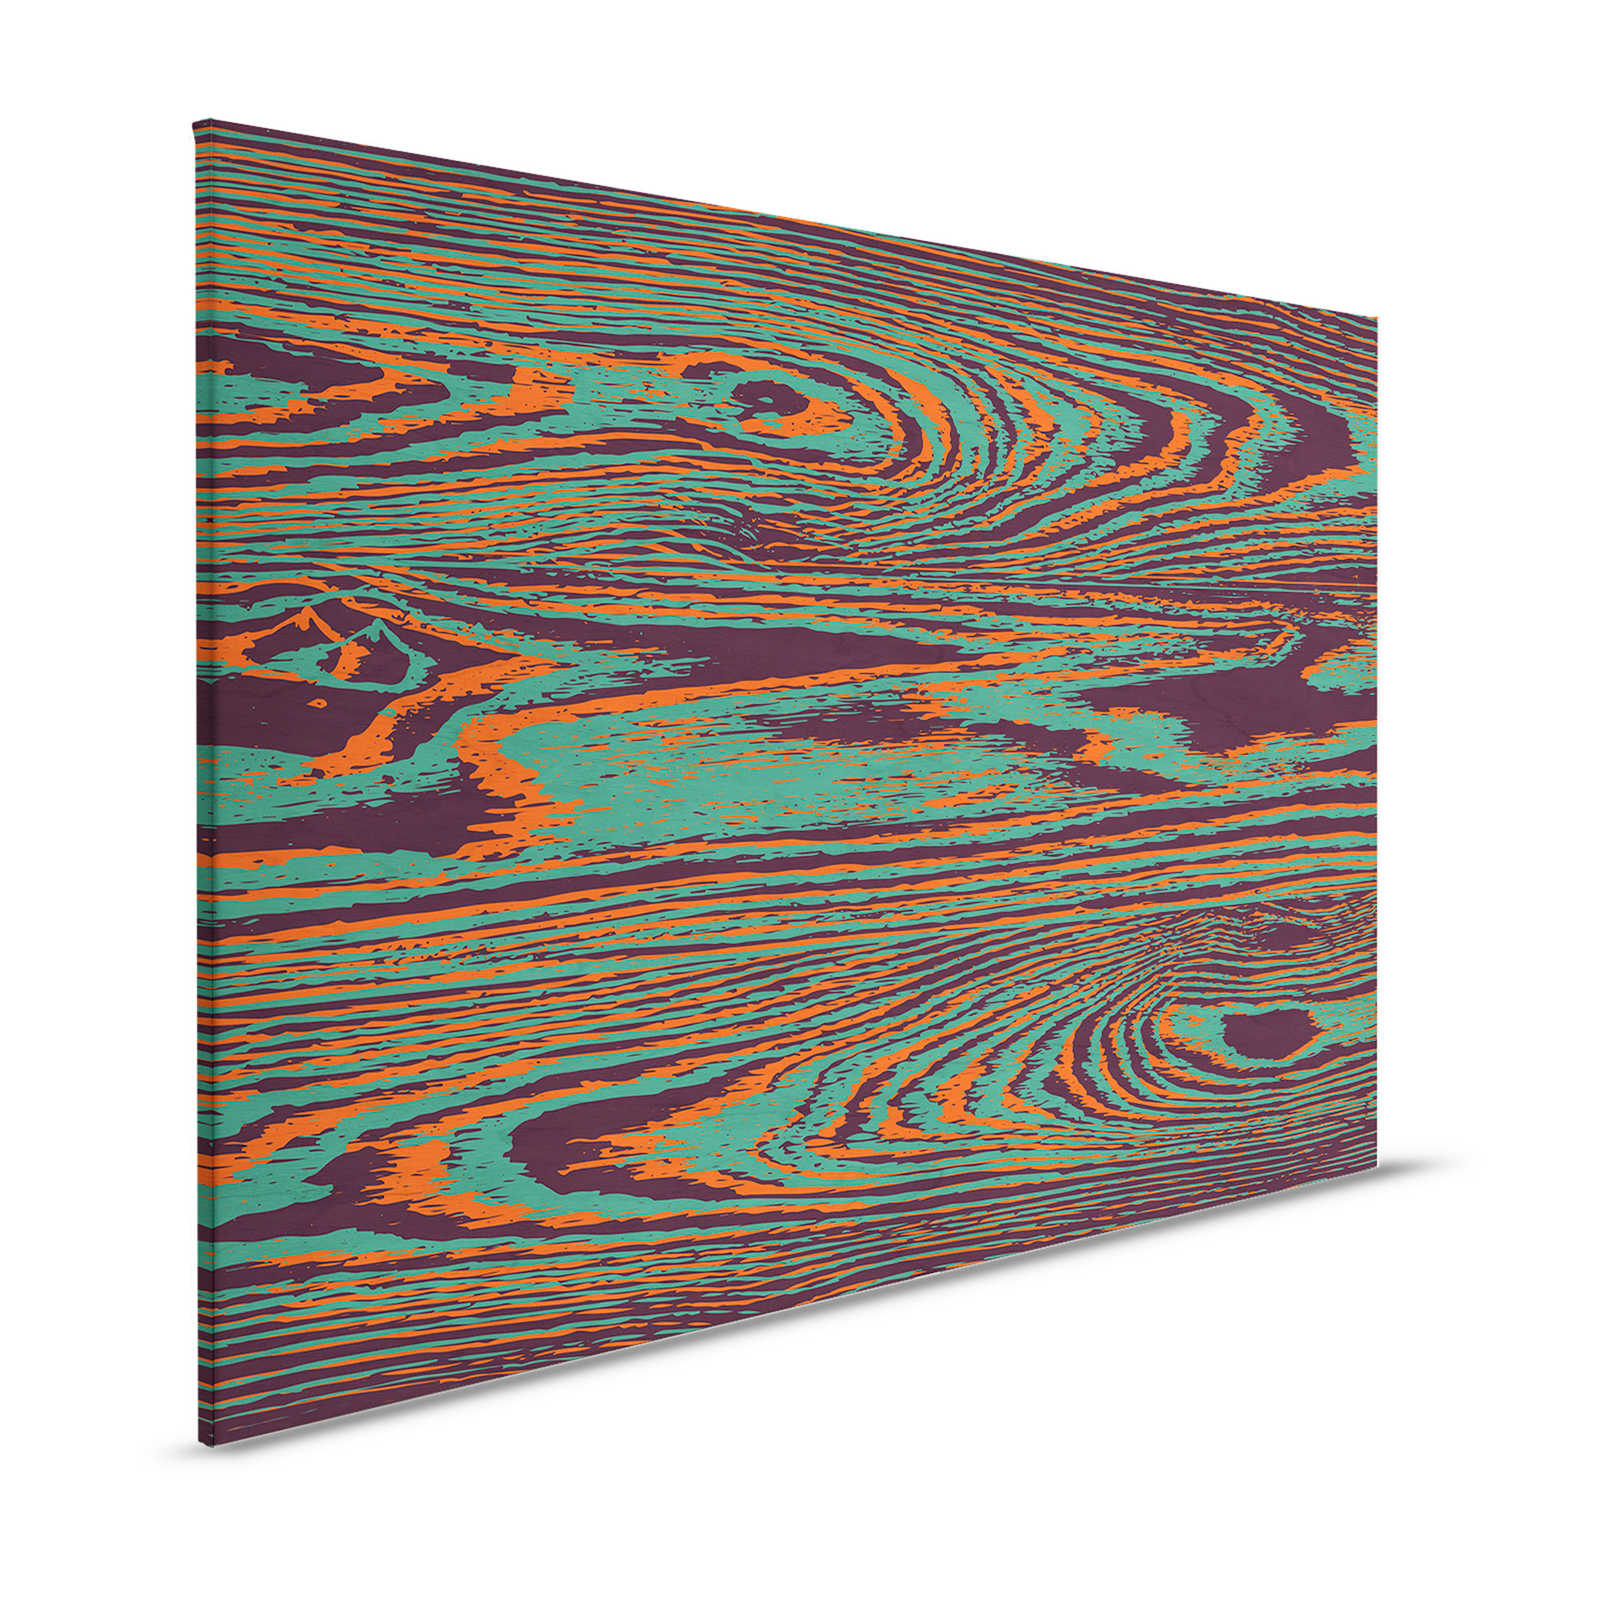 Kontiki 1 - Leinwandbild Holzmaserung Neon-Farben, Grün & Schwarz – 1,20 m x 0,80 m
